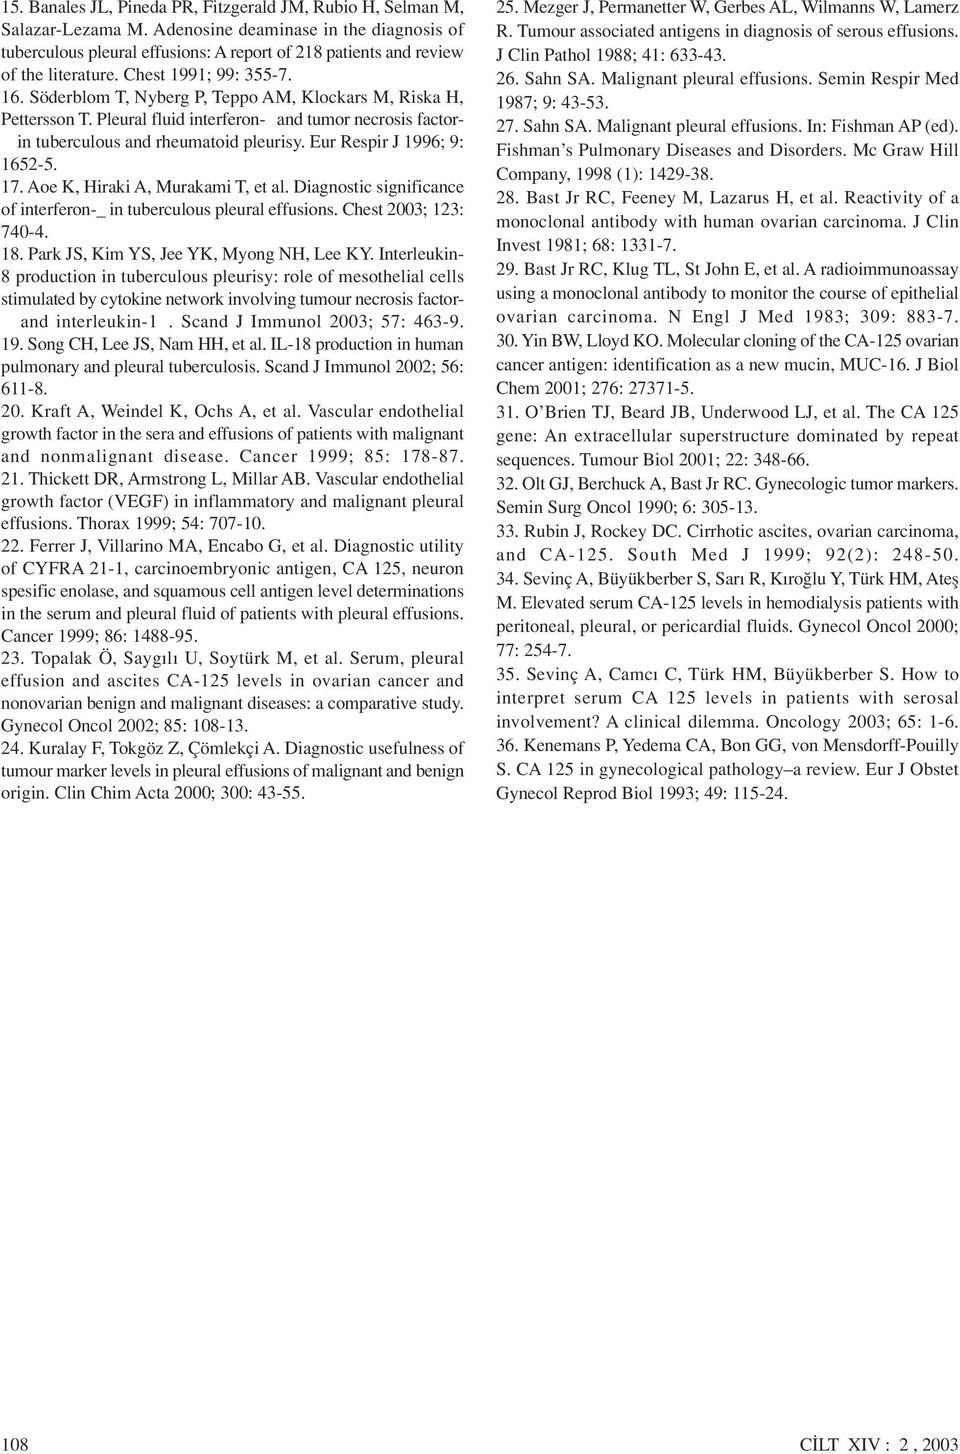 Söderblom T, Nyberg, Teppo AM, Klockars M, Riska H, ettersson T. leural fluid interferon-g and tumor necrosis factora in tuberculous and rheumatoid pleurisy. Eur Respir J 1996; 9: 1652-5. 17.